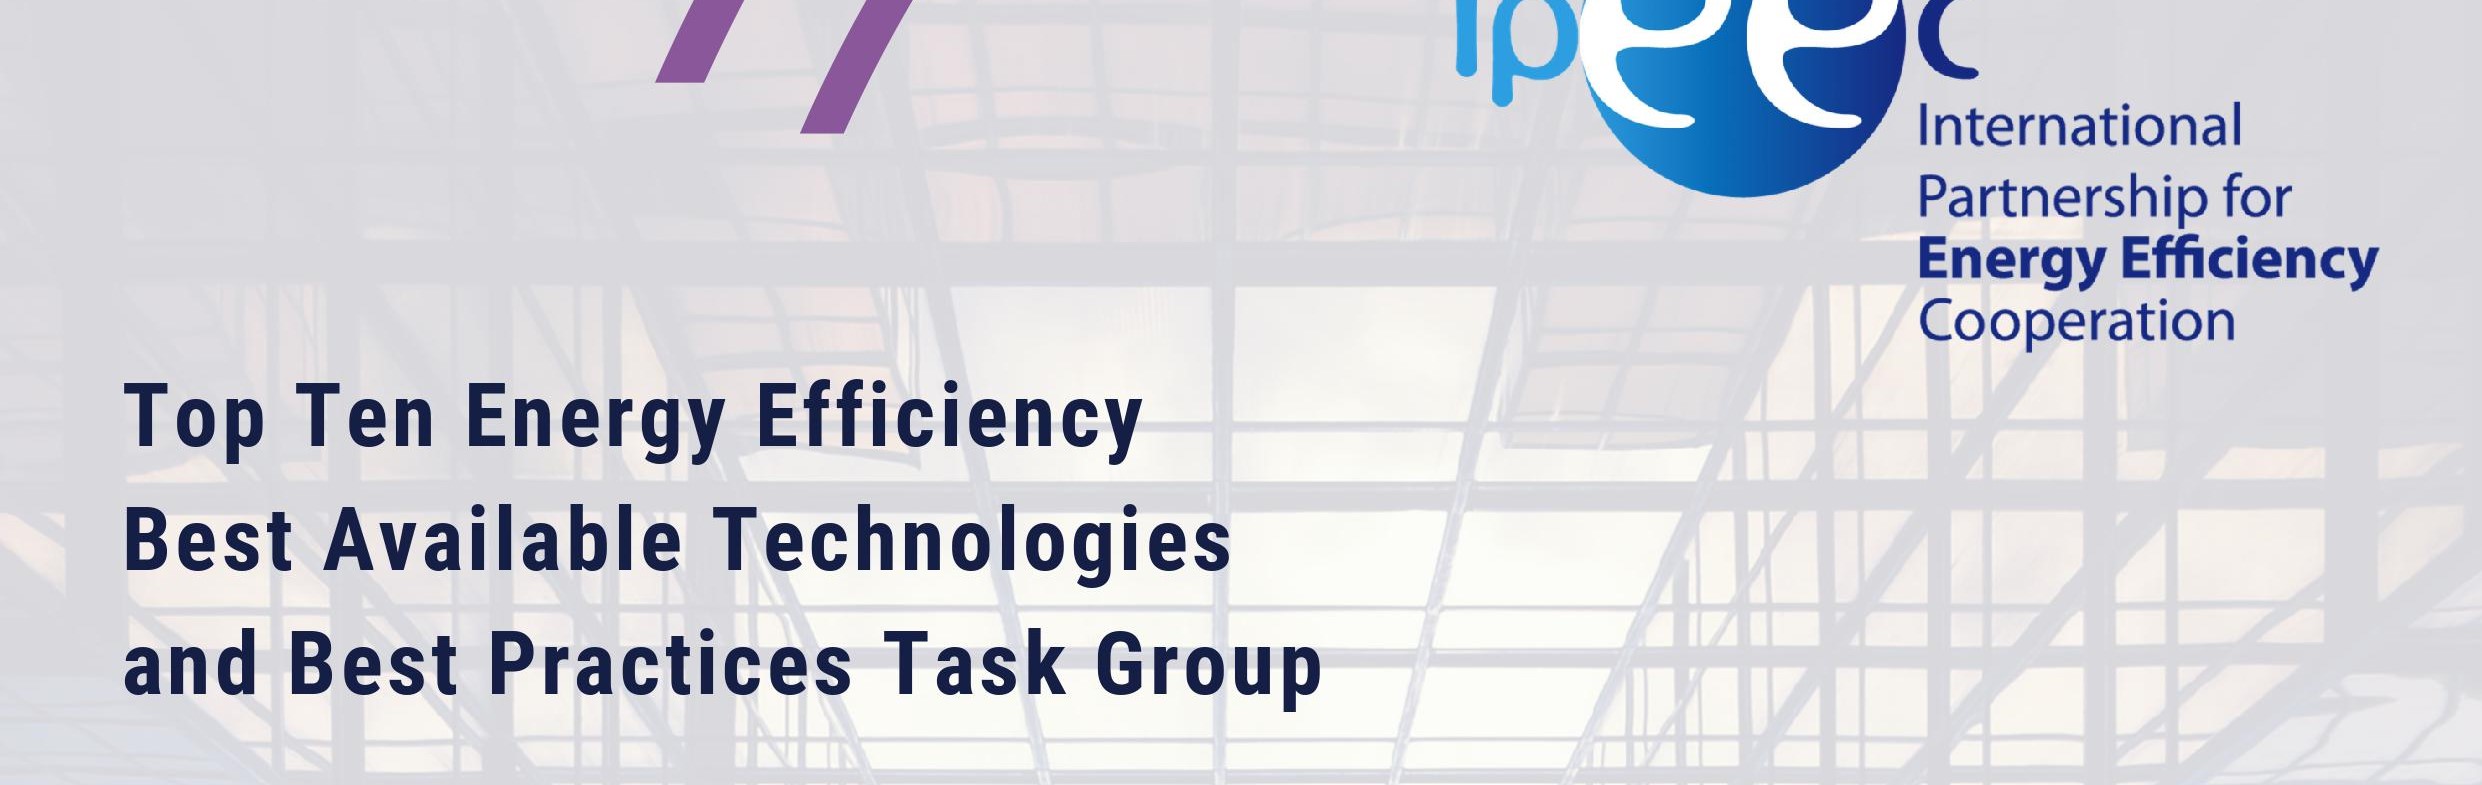 ROSLIM selected for Top Ten Energy Efficiency Best Available Technologies by IPEEC in June, 2019